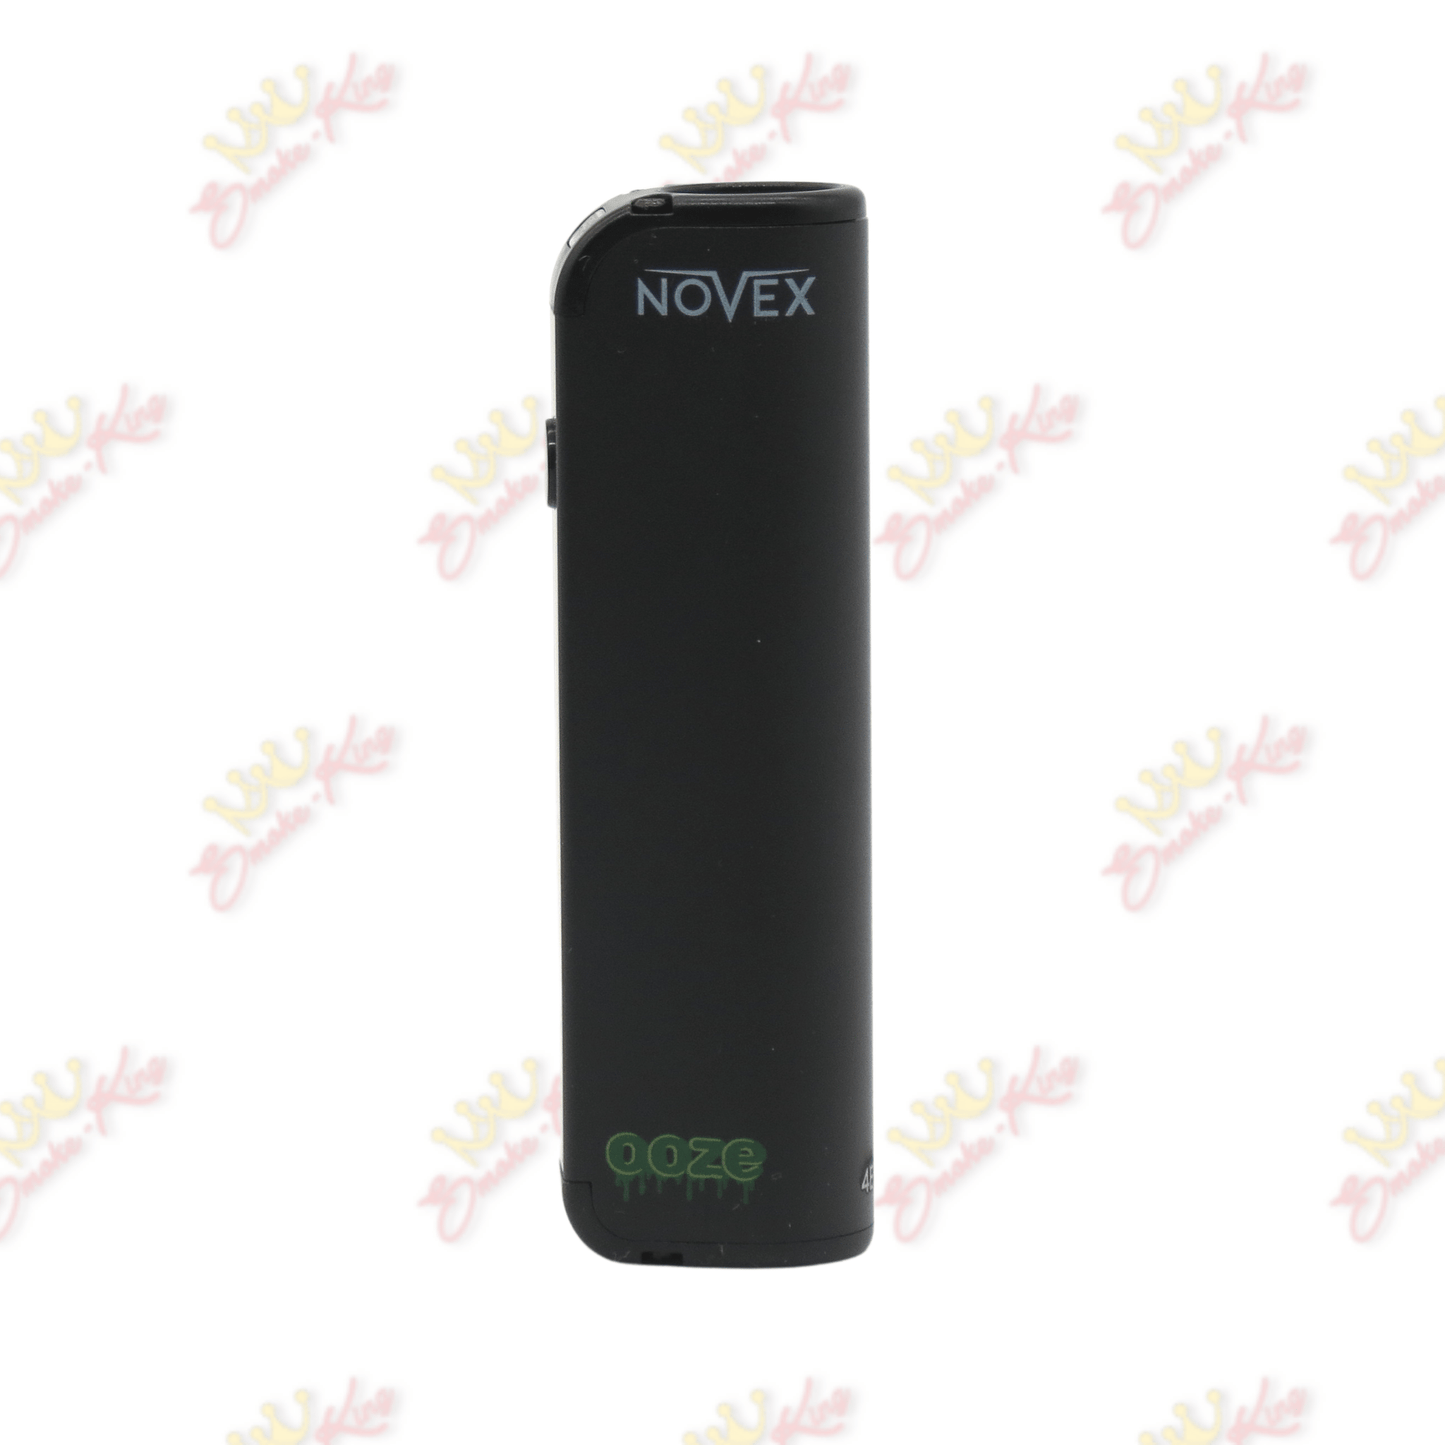 Ooze Black Ooze Novex Battery Oozed Novex | Cartridge Battery | Smoke King